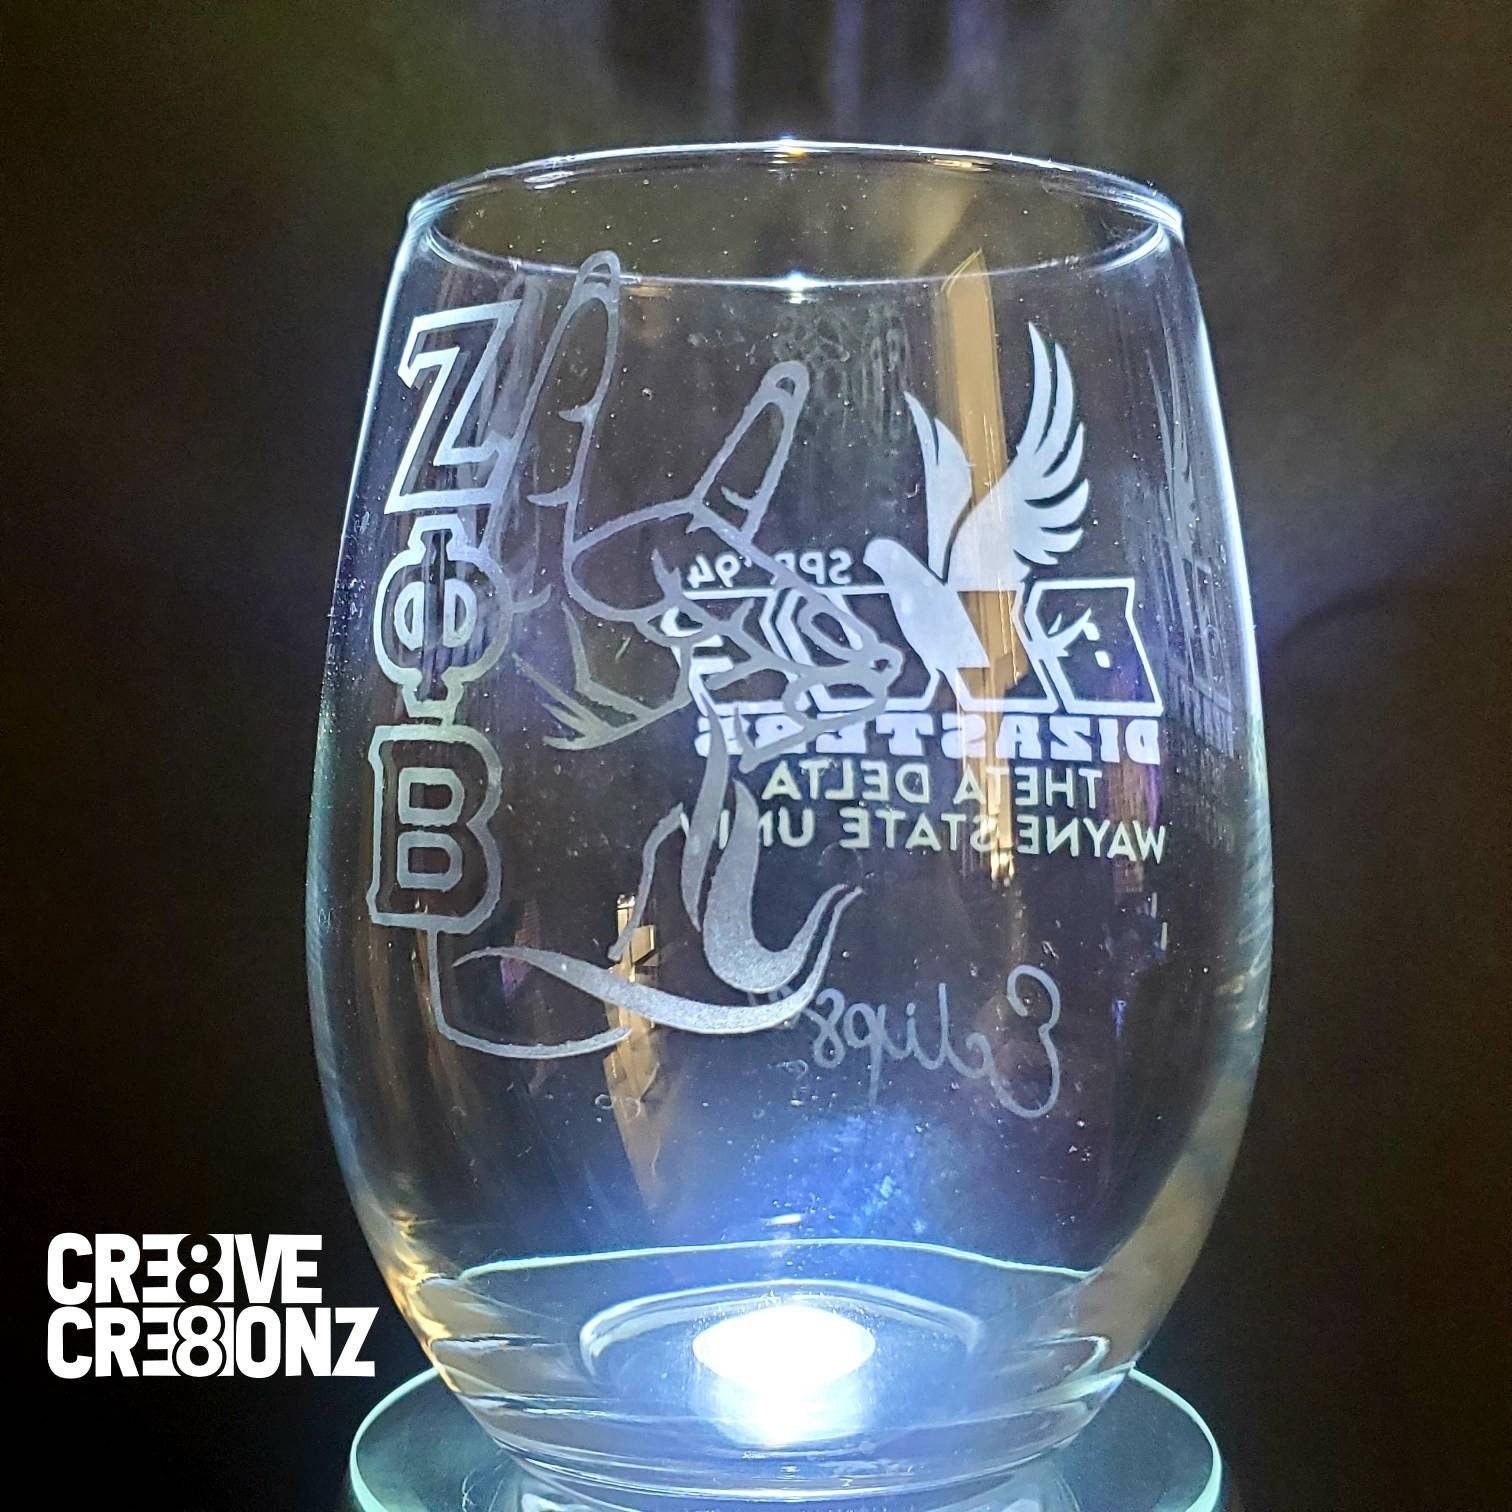 Zeta Phi Beta Glass - Cre8ive Cre8ionz